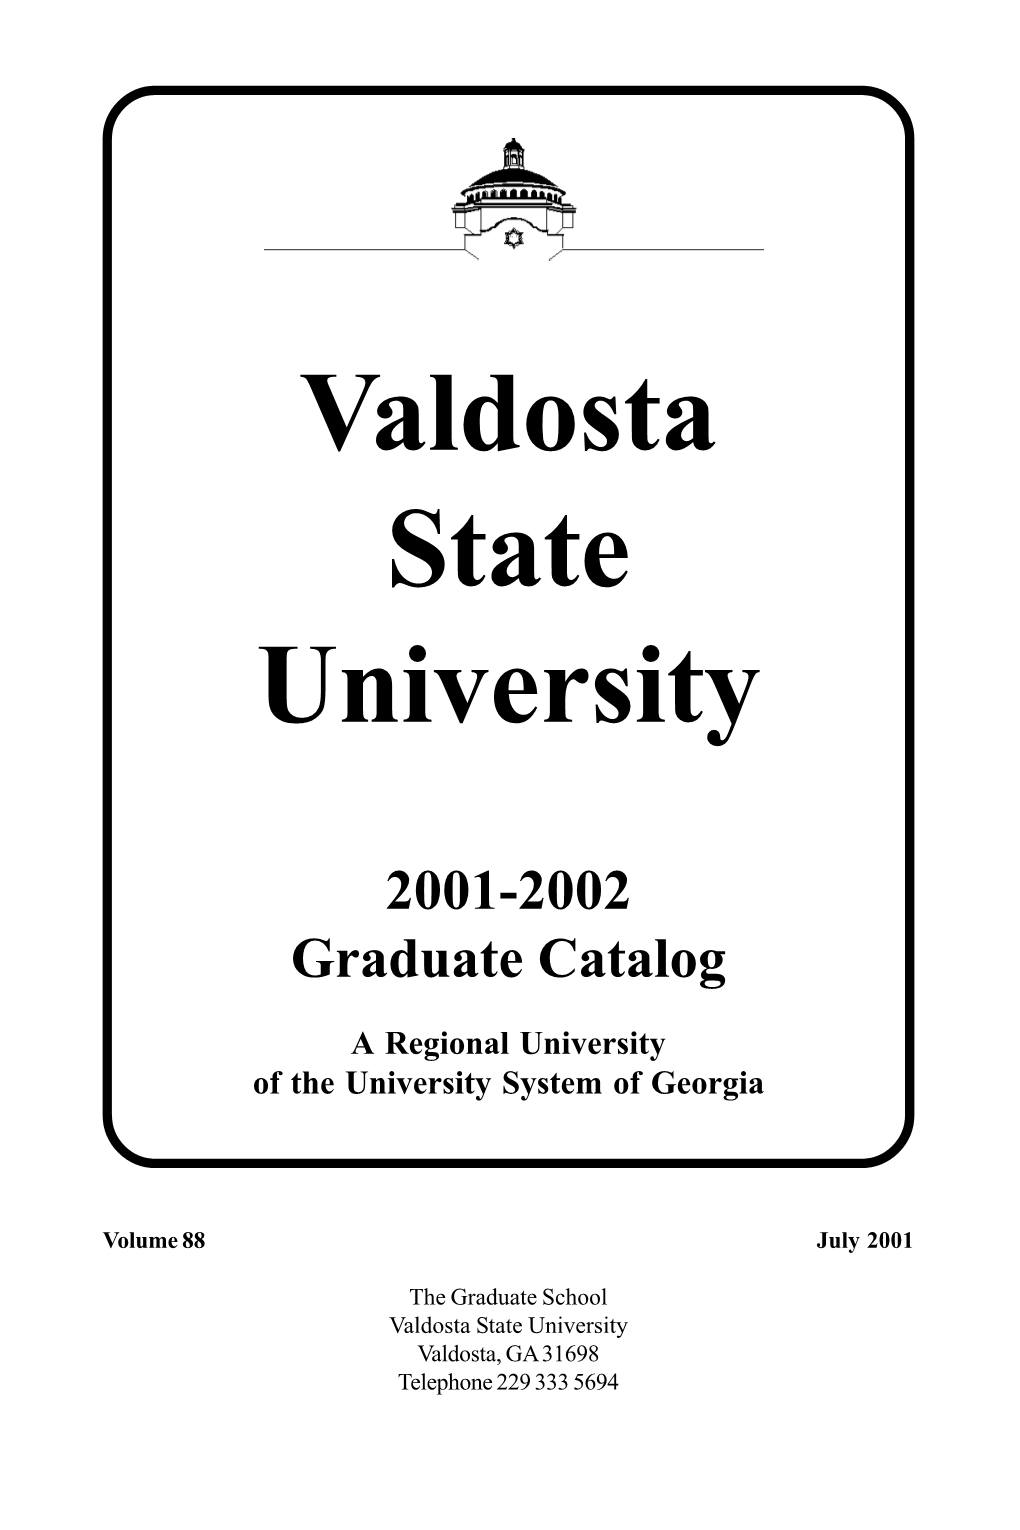 Graduate Catalog -- Valdosta State University